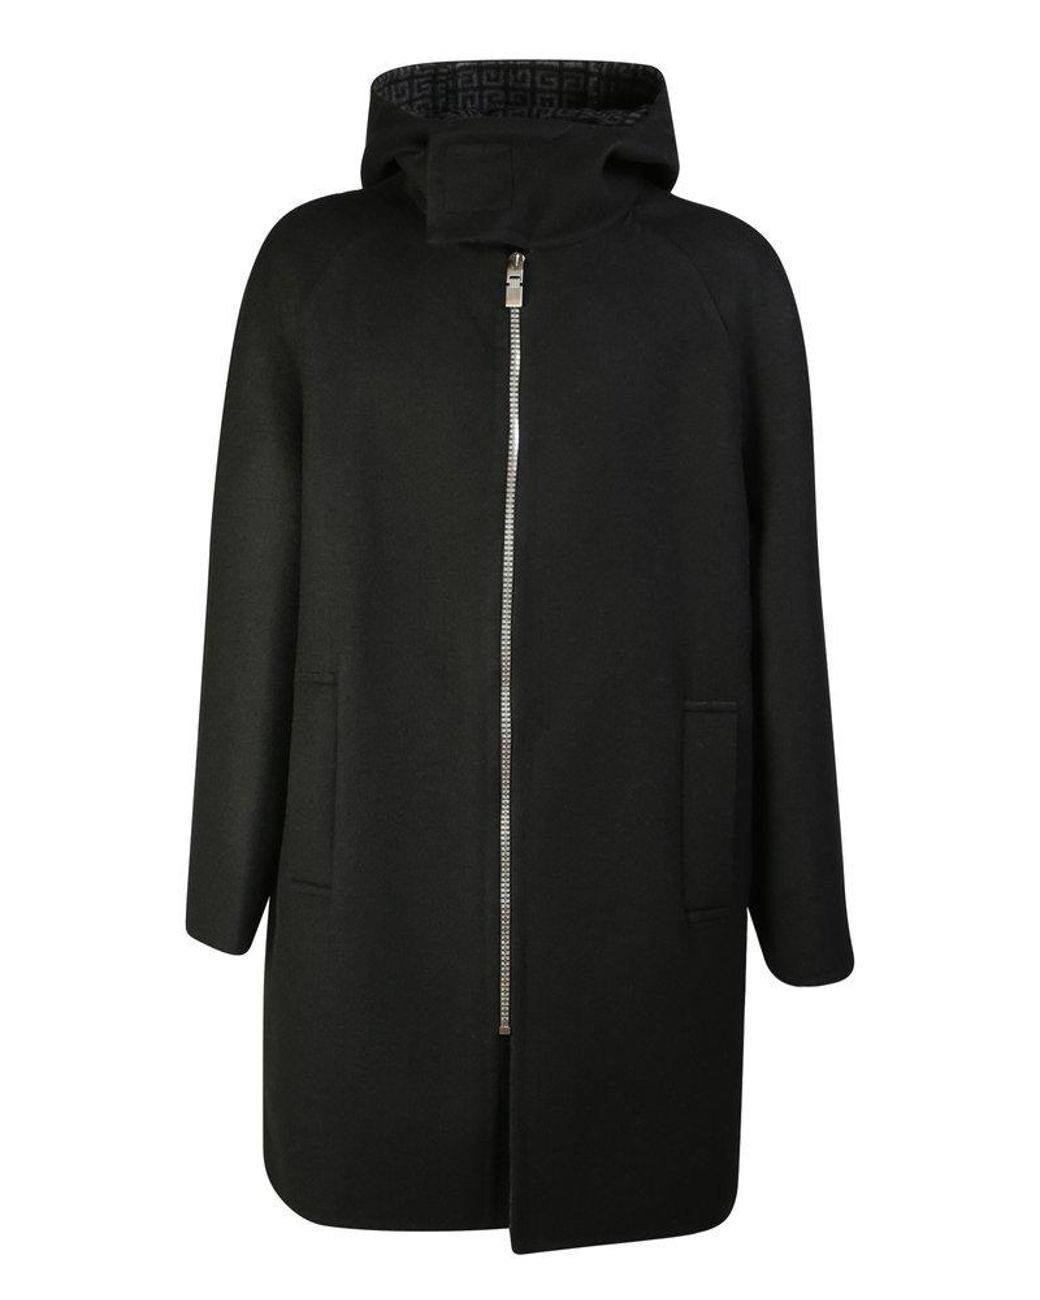 Givenchy Wool 4g Motif Hooded Coat in Black for Men | Lyst UK